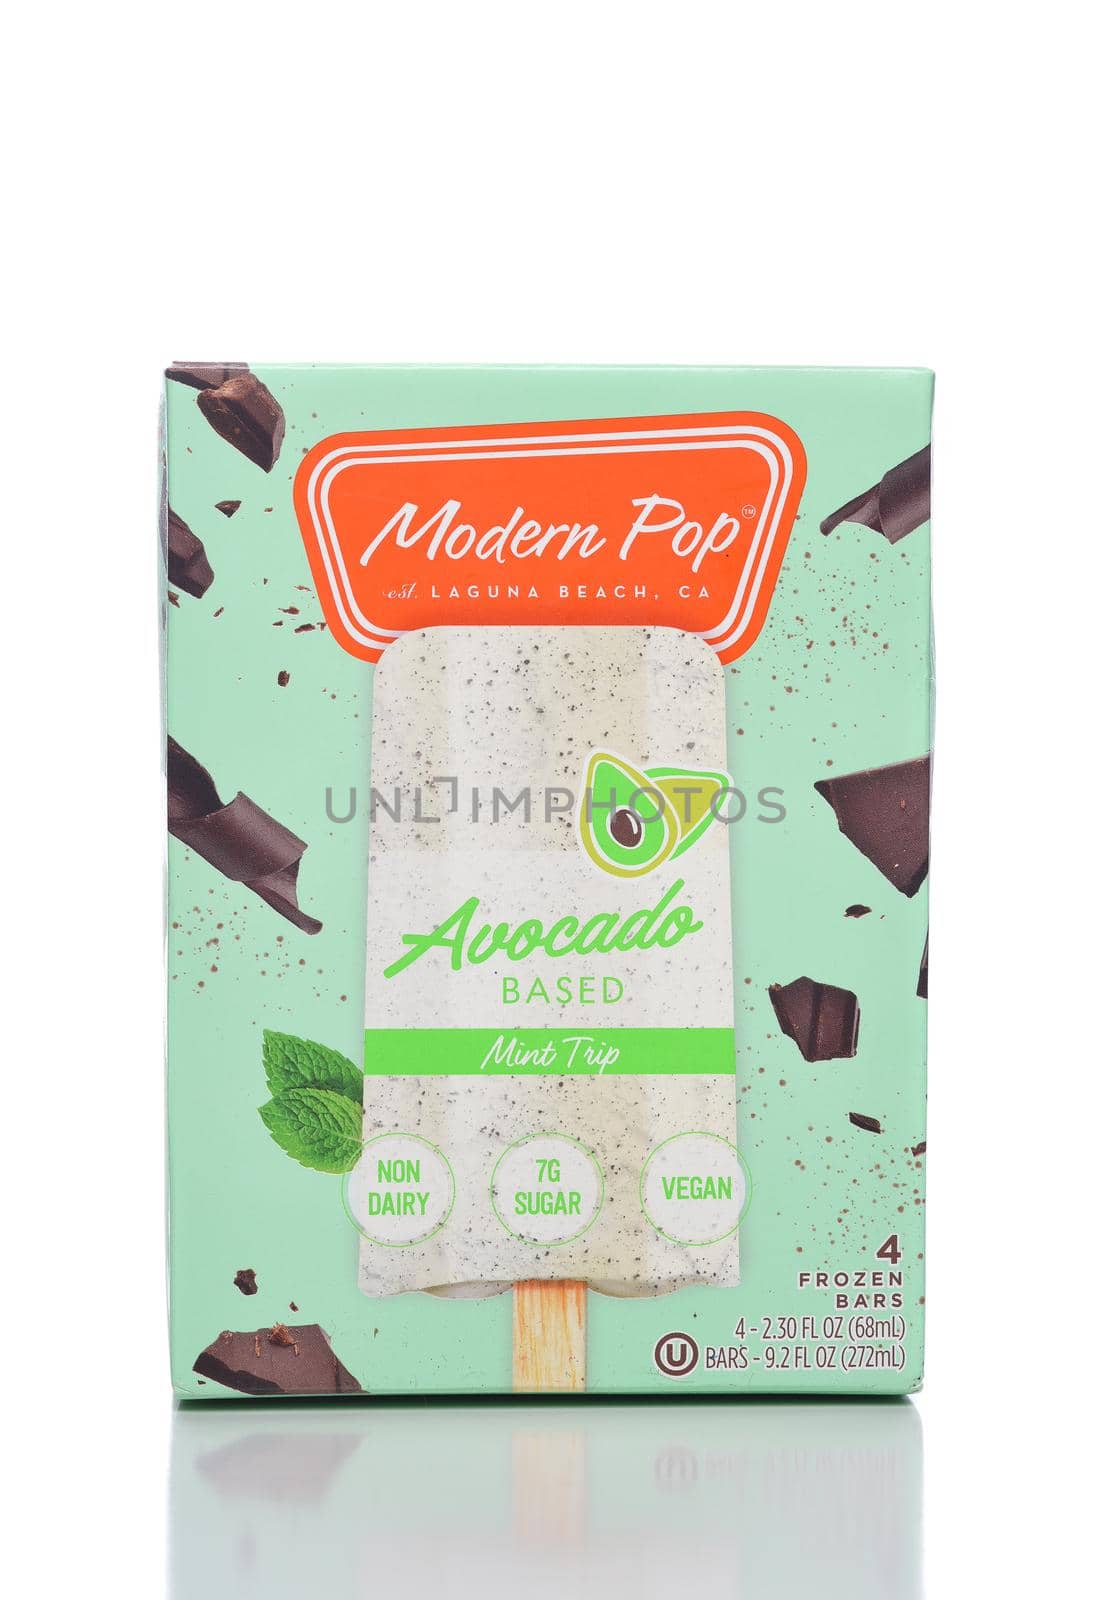 IRVINE, CALIFORNIA - 12 NOV 2020: A package of Modern Pop an Avocado based non-dairy, vegan Frozen Pop. 